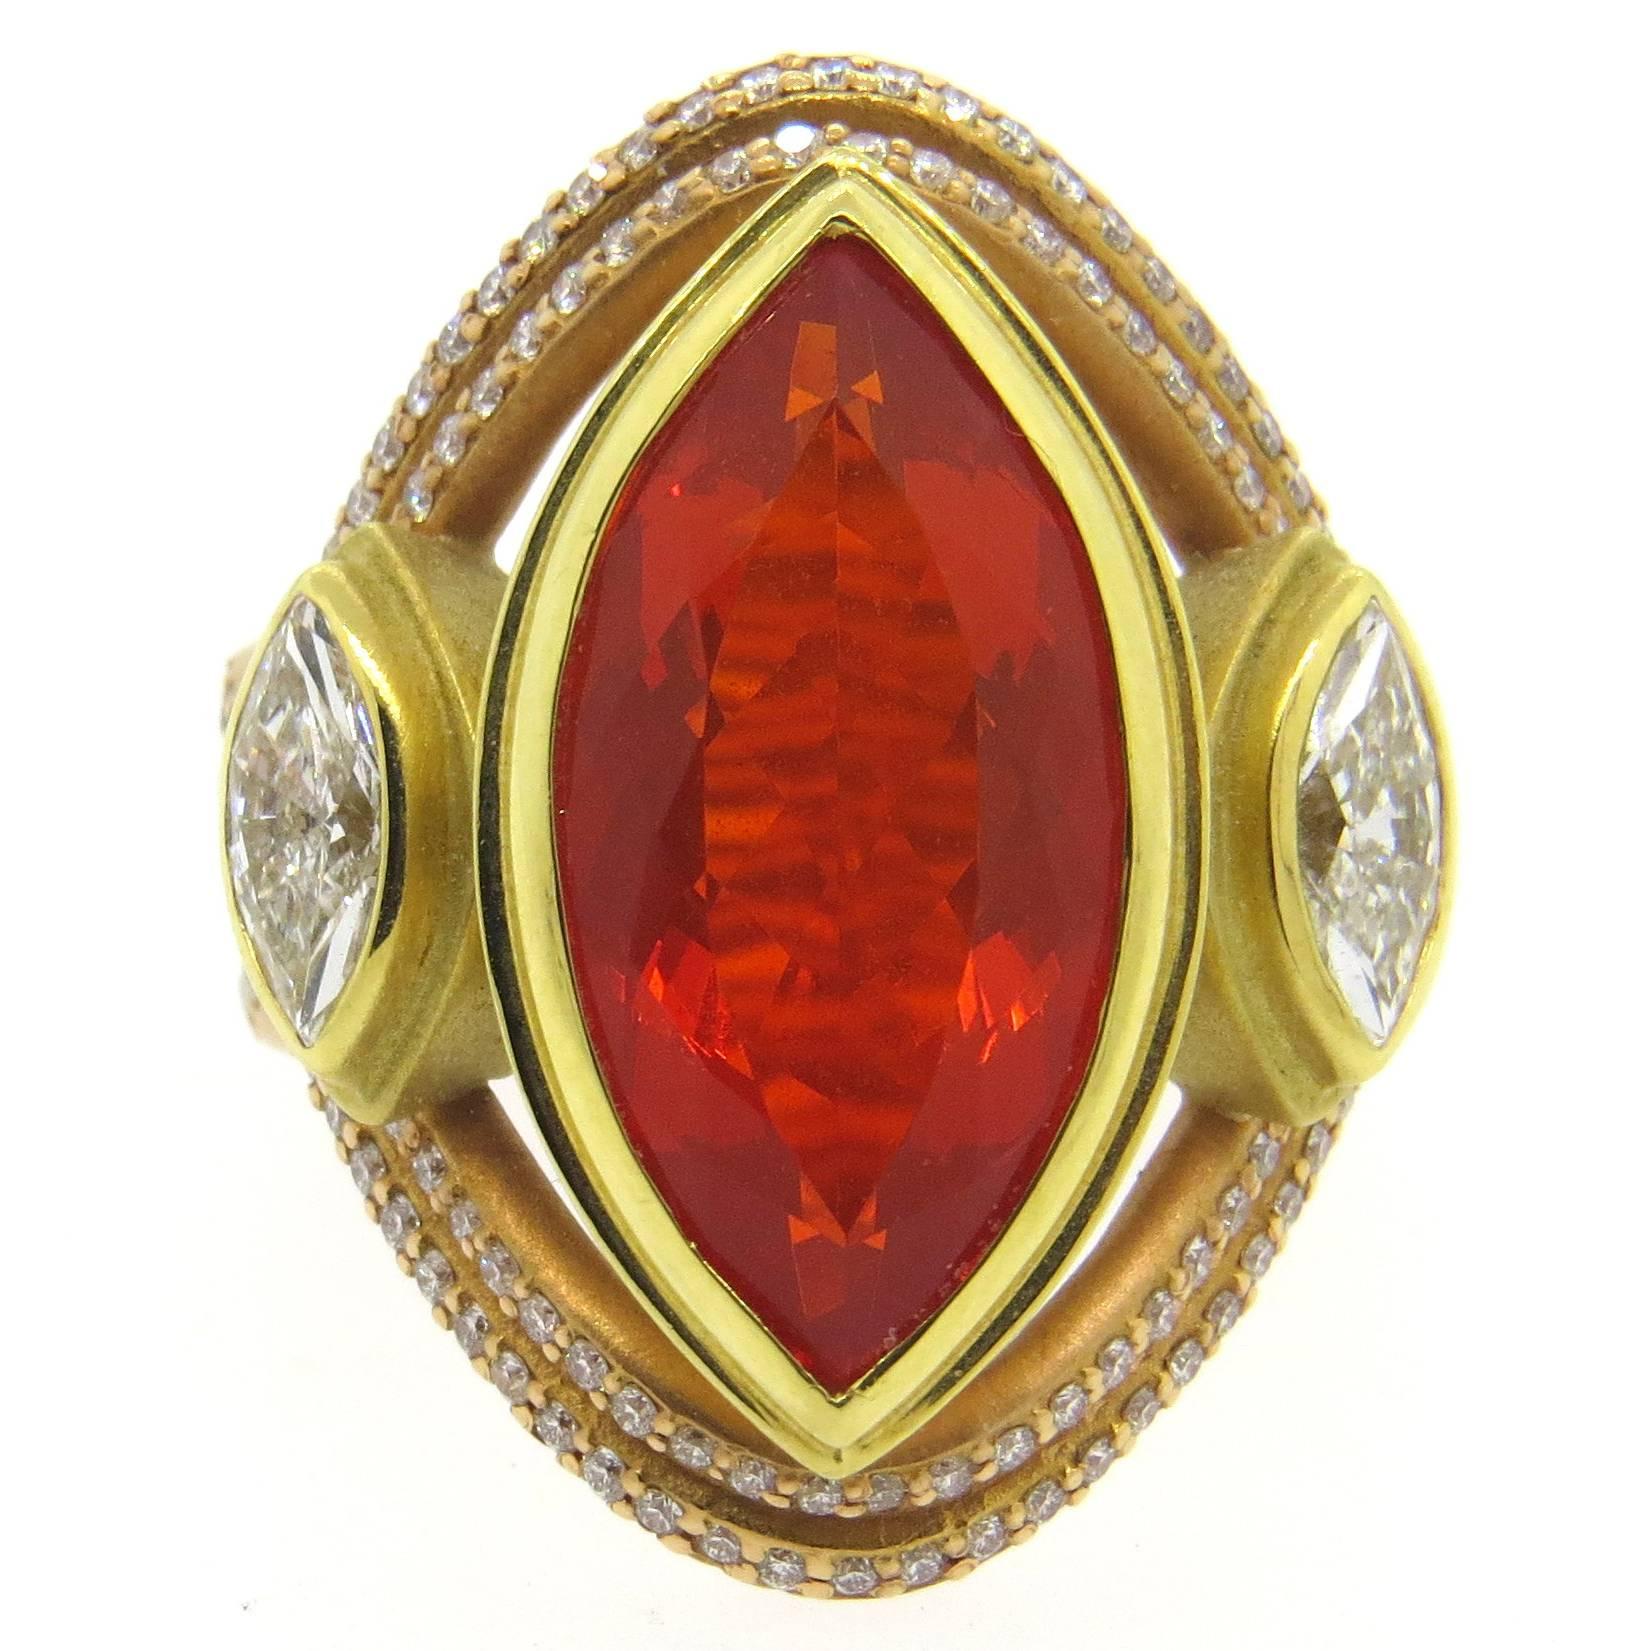 Impressive Sam Lehr Mexican Fire Opal Diamond Gold Ring